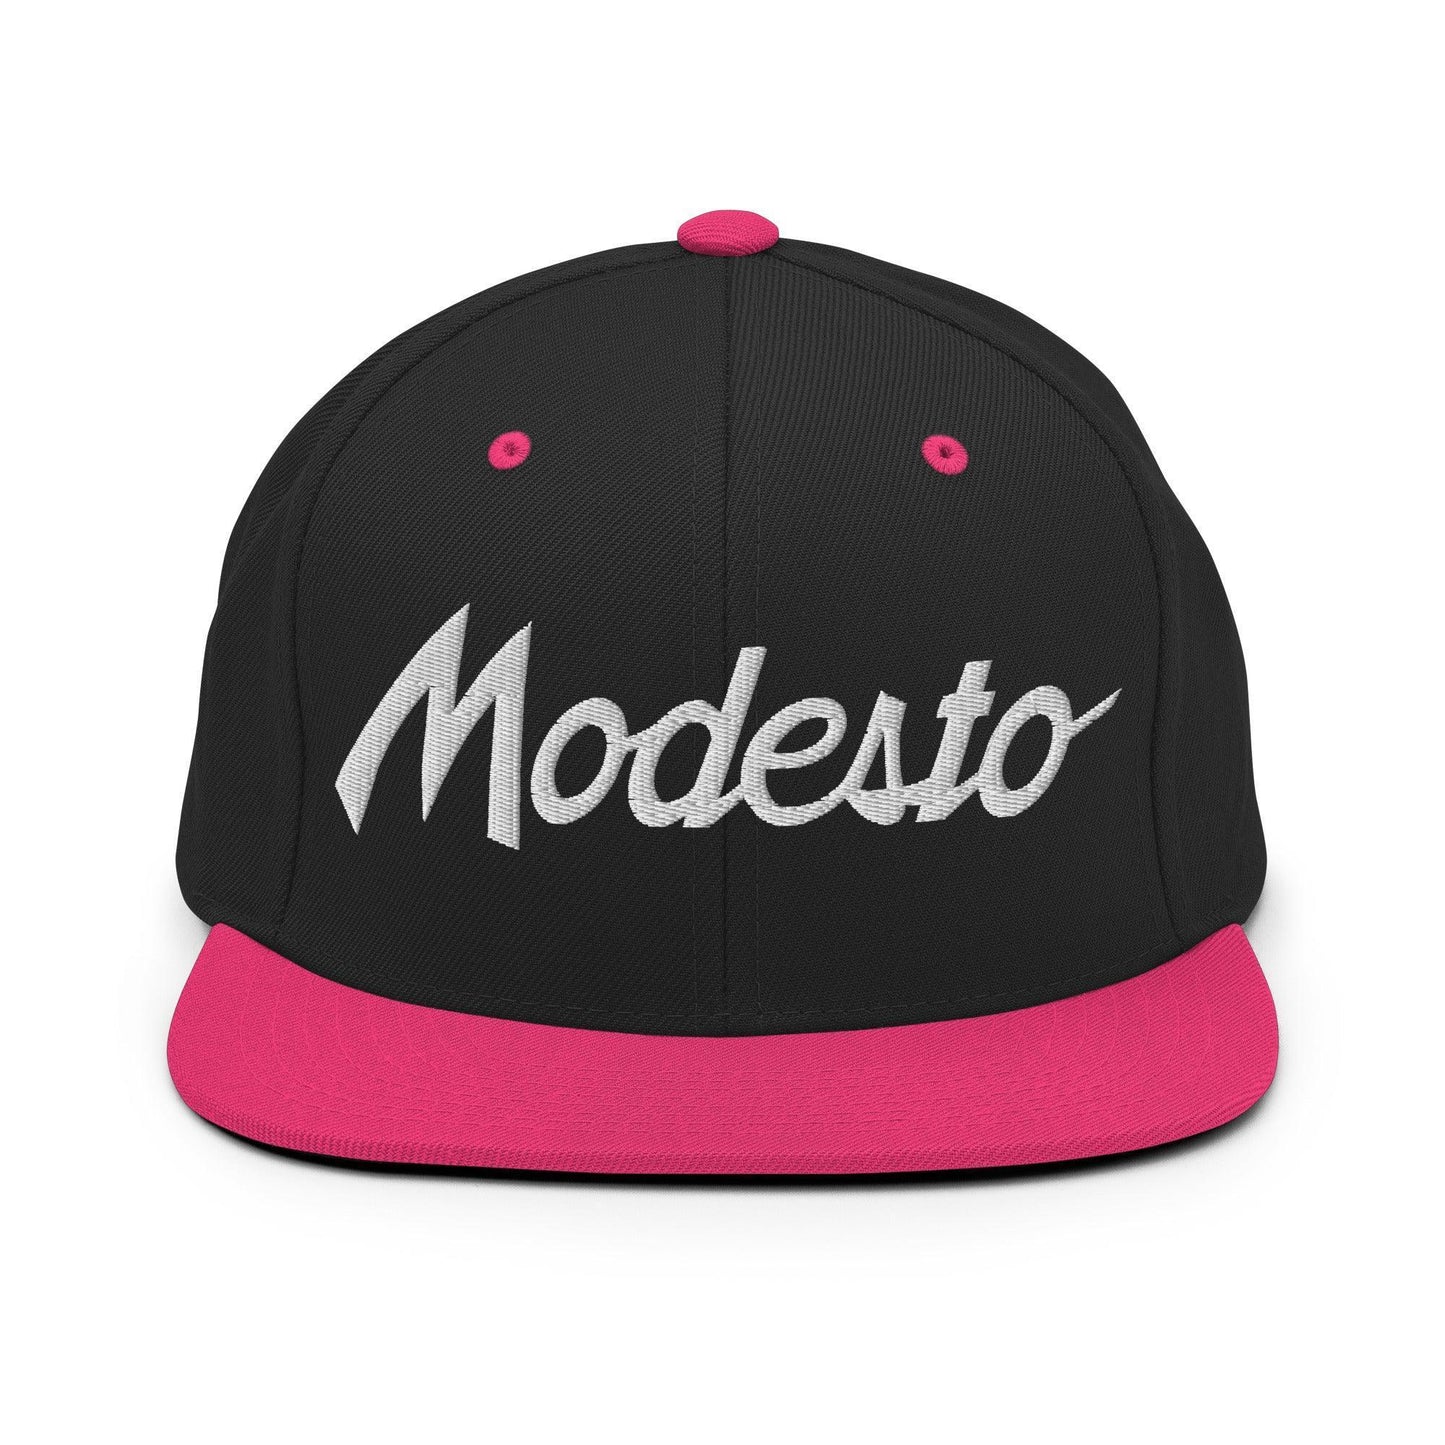 Modesto Script Snapback Hat Black Neon Pink